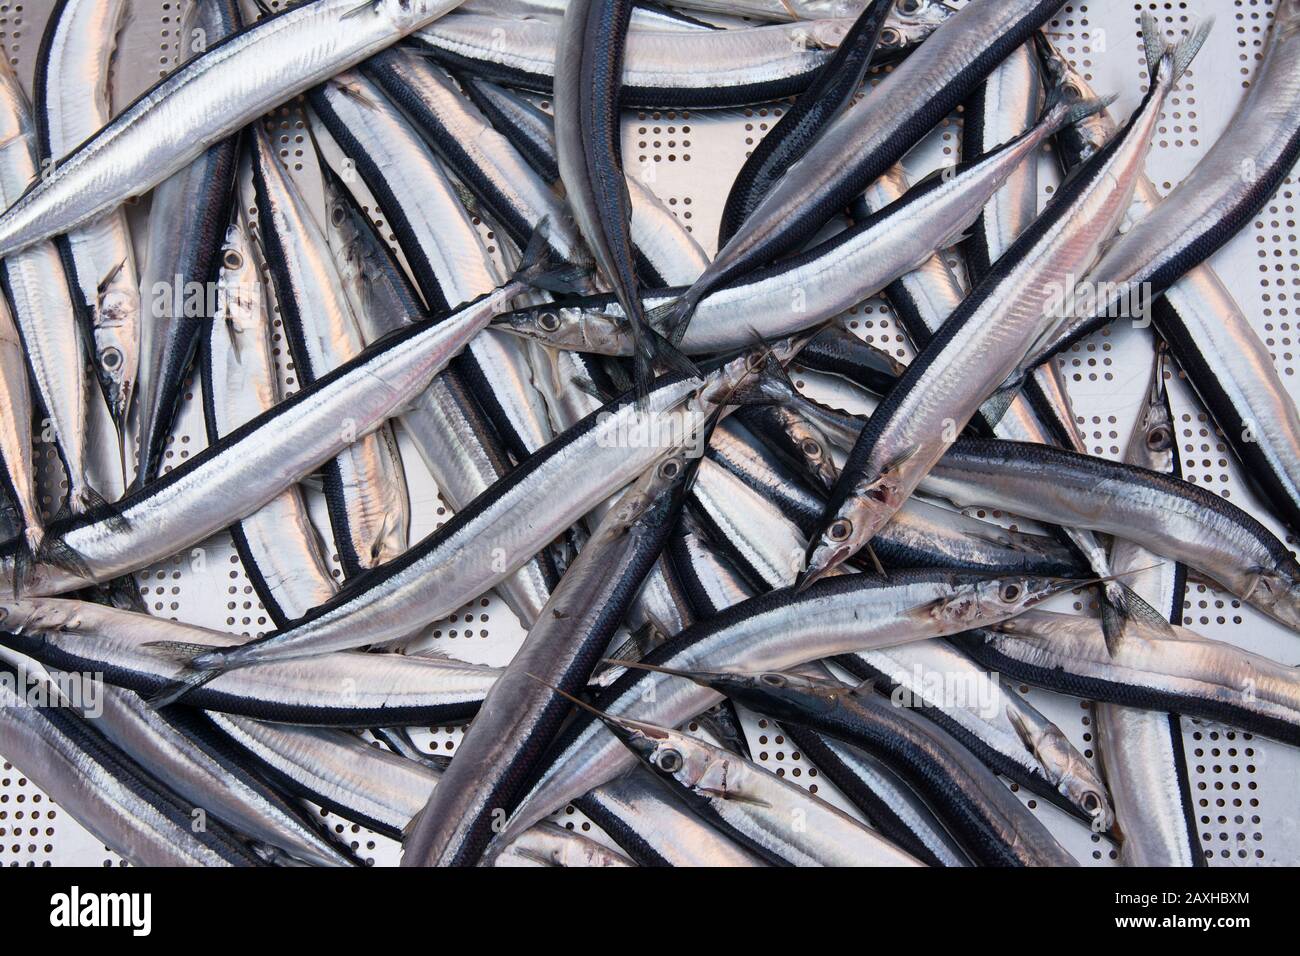 Catania, Sicily, Italy. needlefish, typical mediterranean sea fish sold in Sicilian markets. Stock Photo